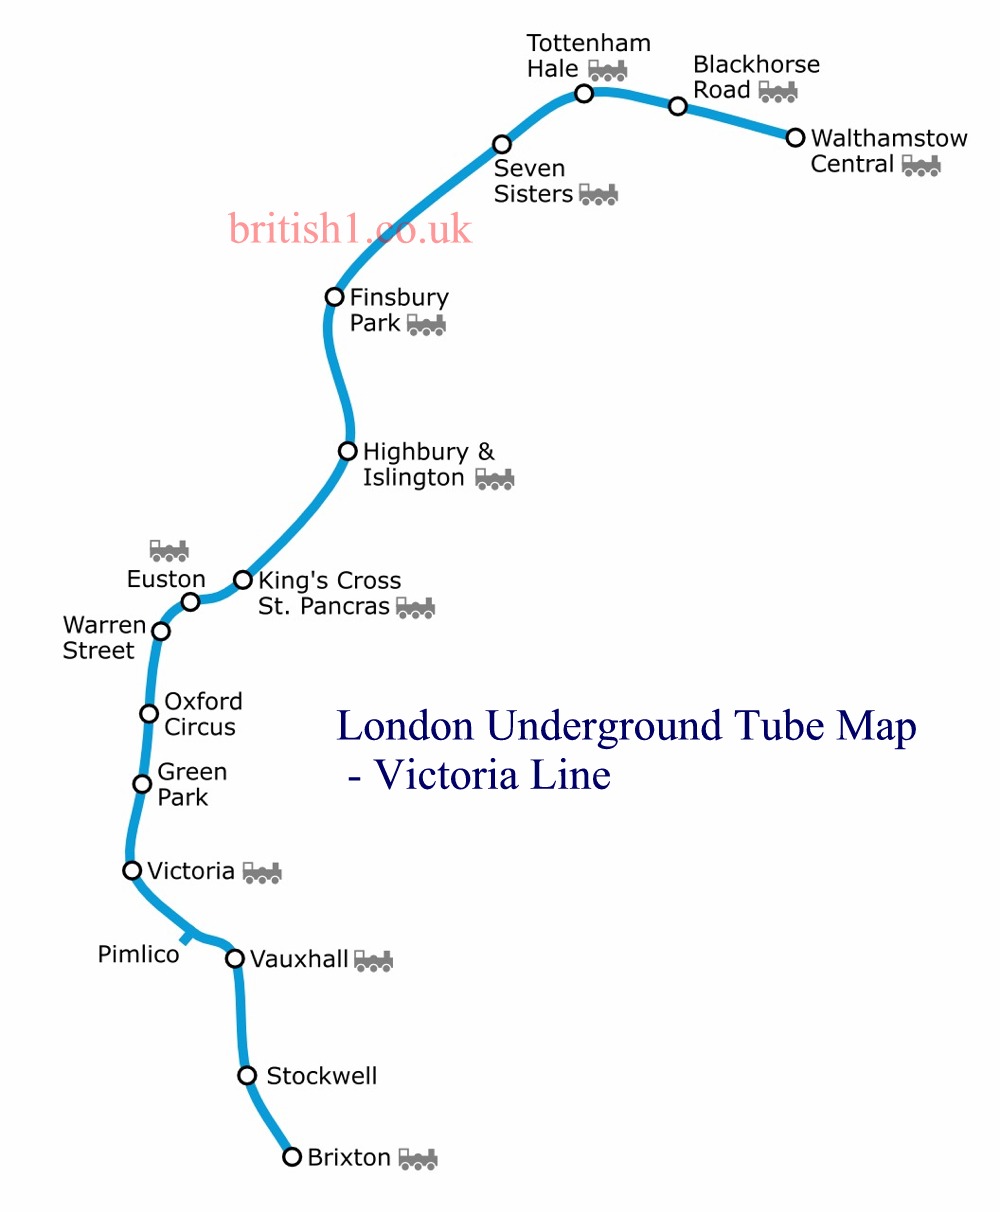 London Underground Tube Map - Victoria Line